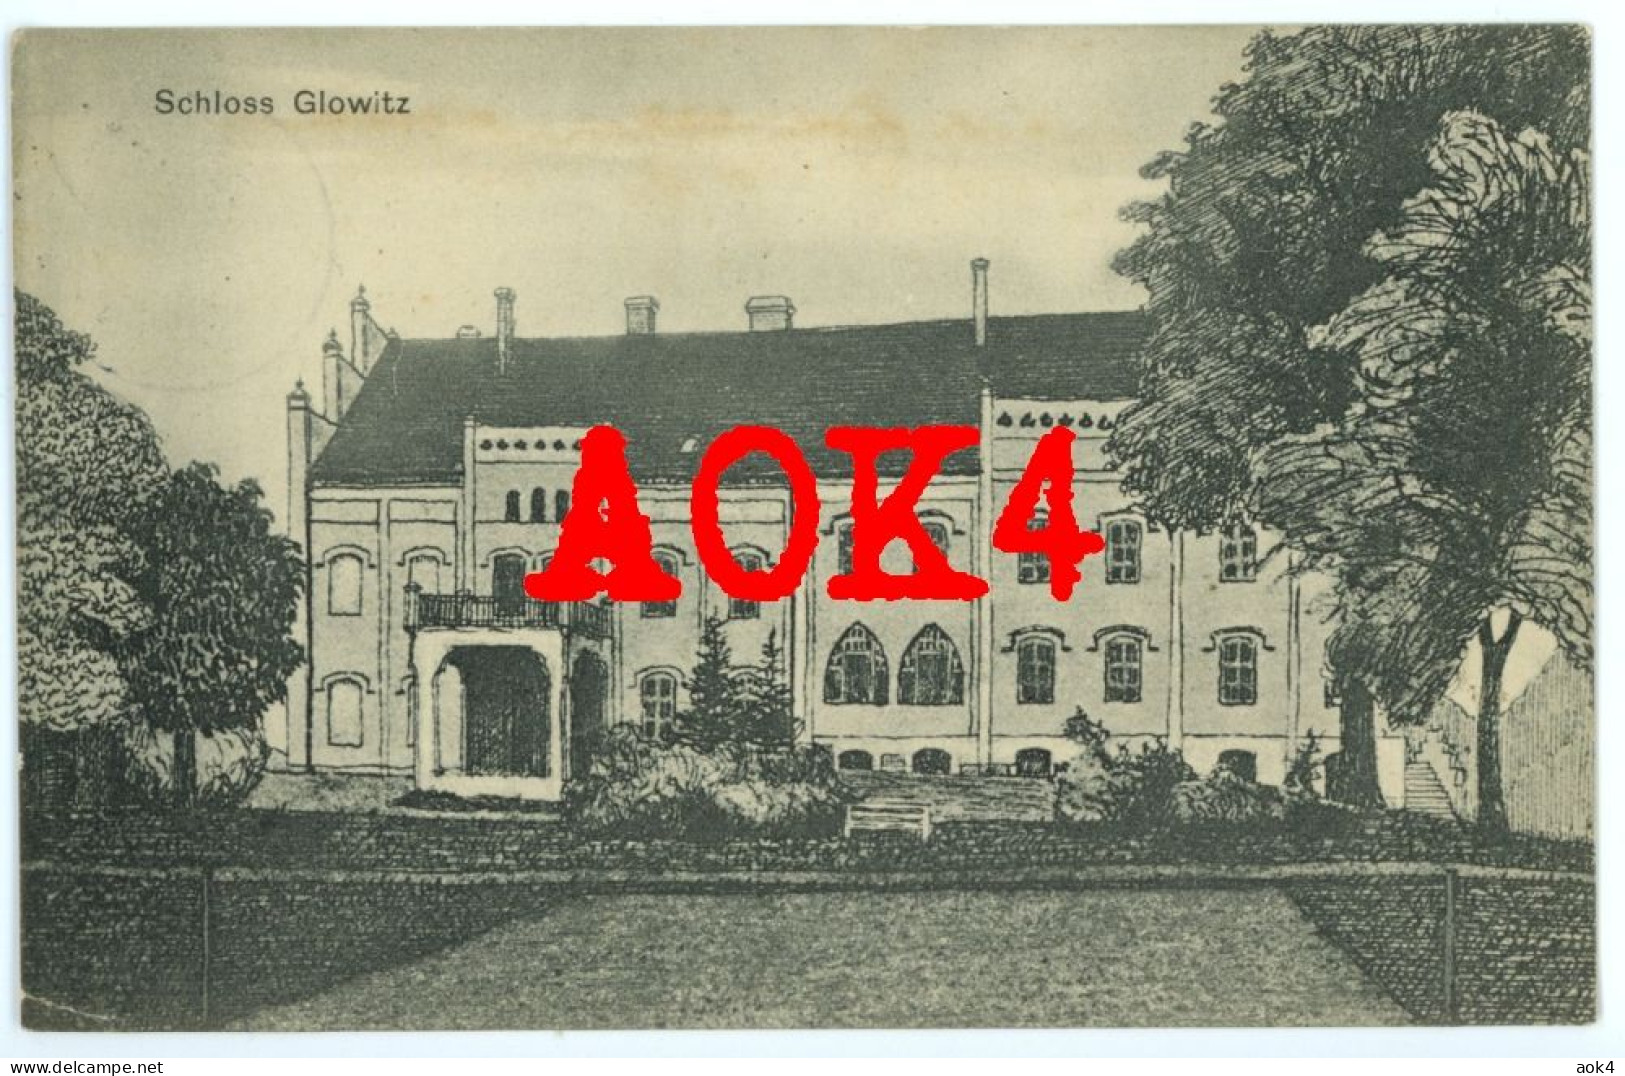 GLOWITZ Schloss Glowczyce Pommern Stolp Polska 1915 Feldpost - Pommern